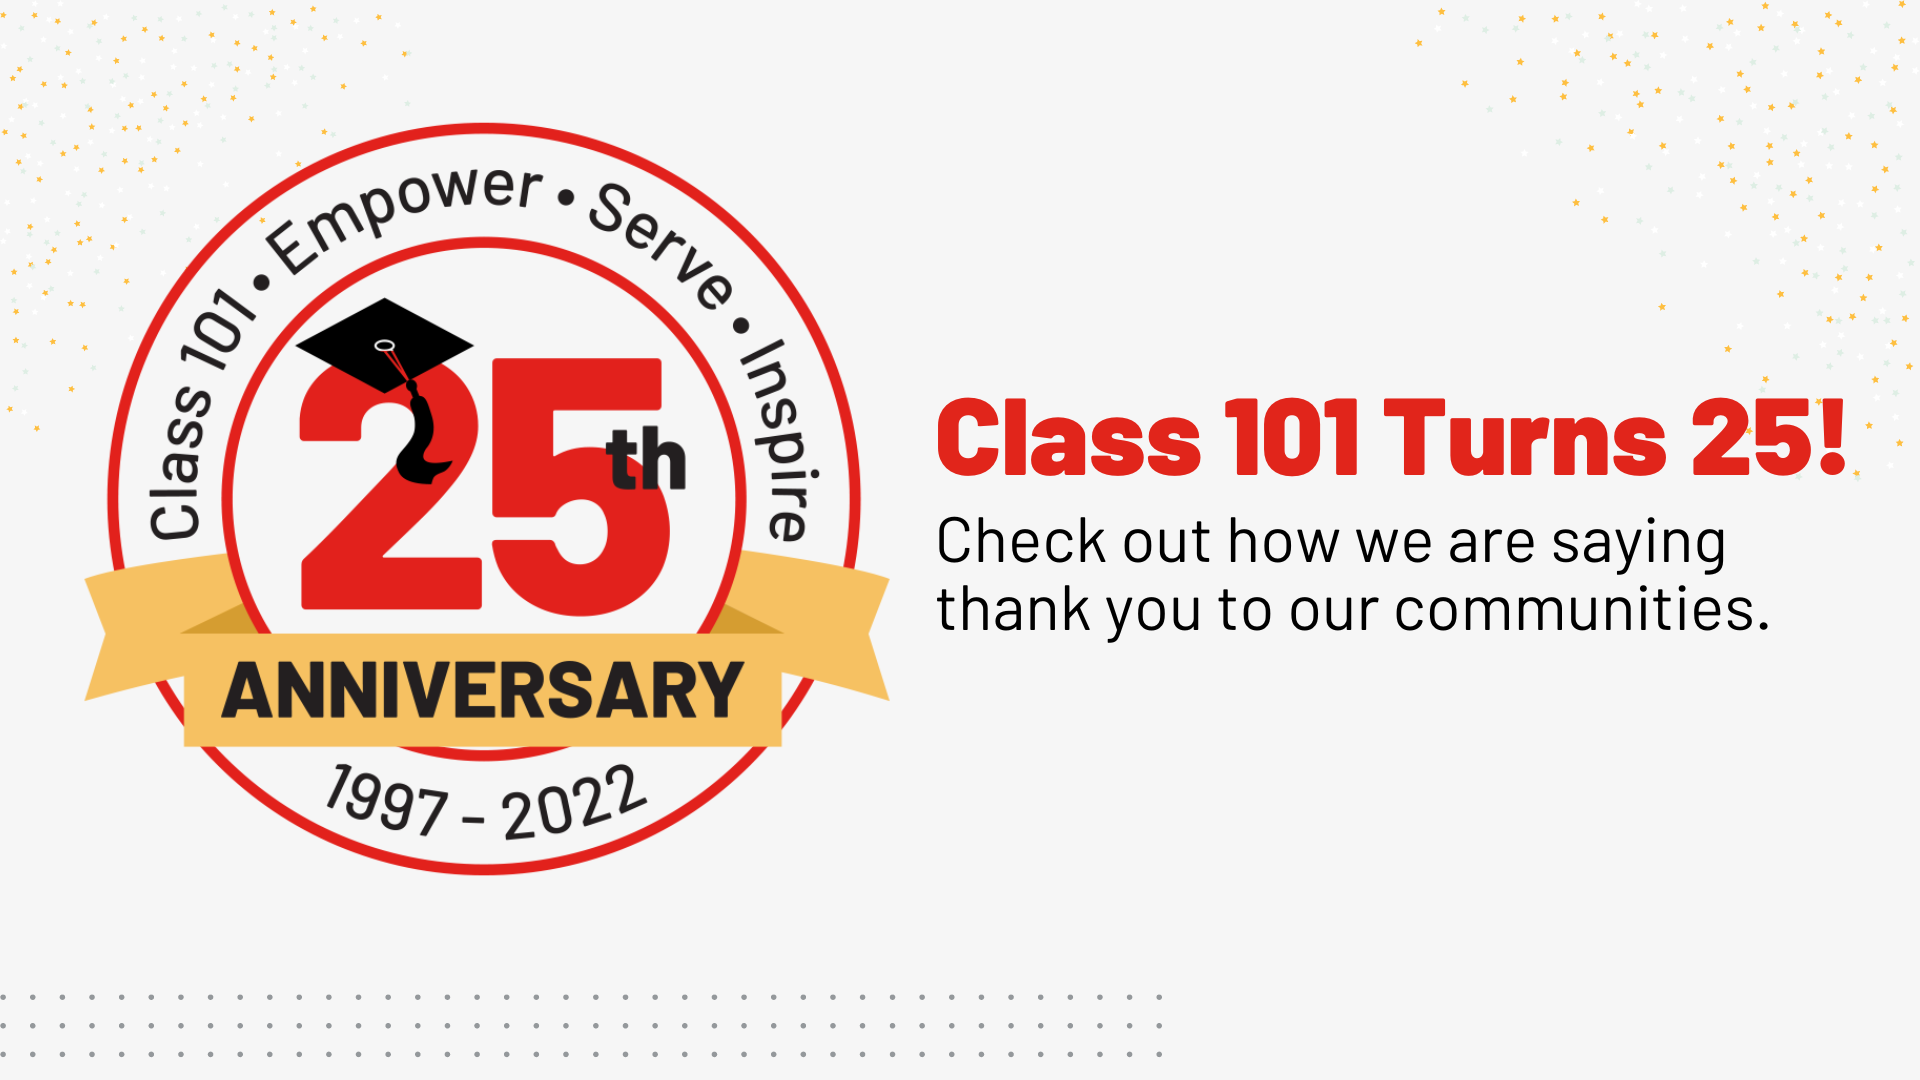 Class 101 Turns 25!